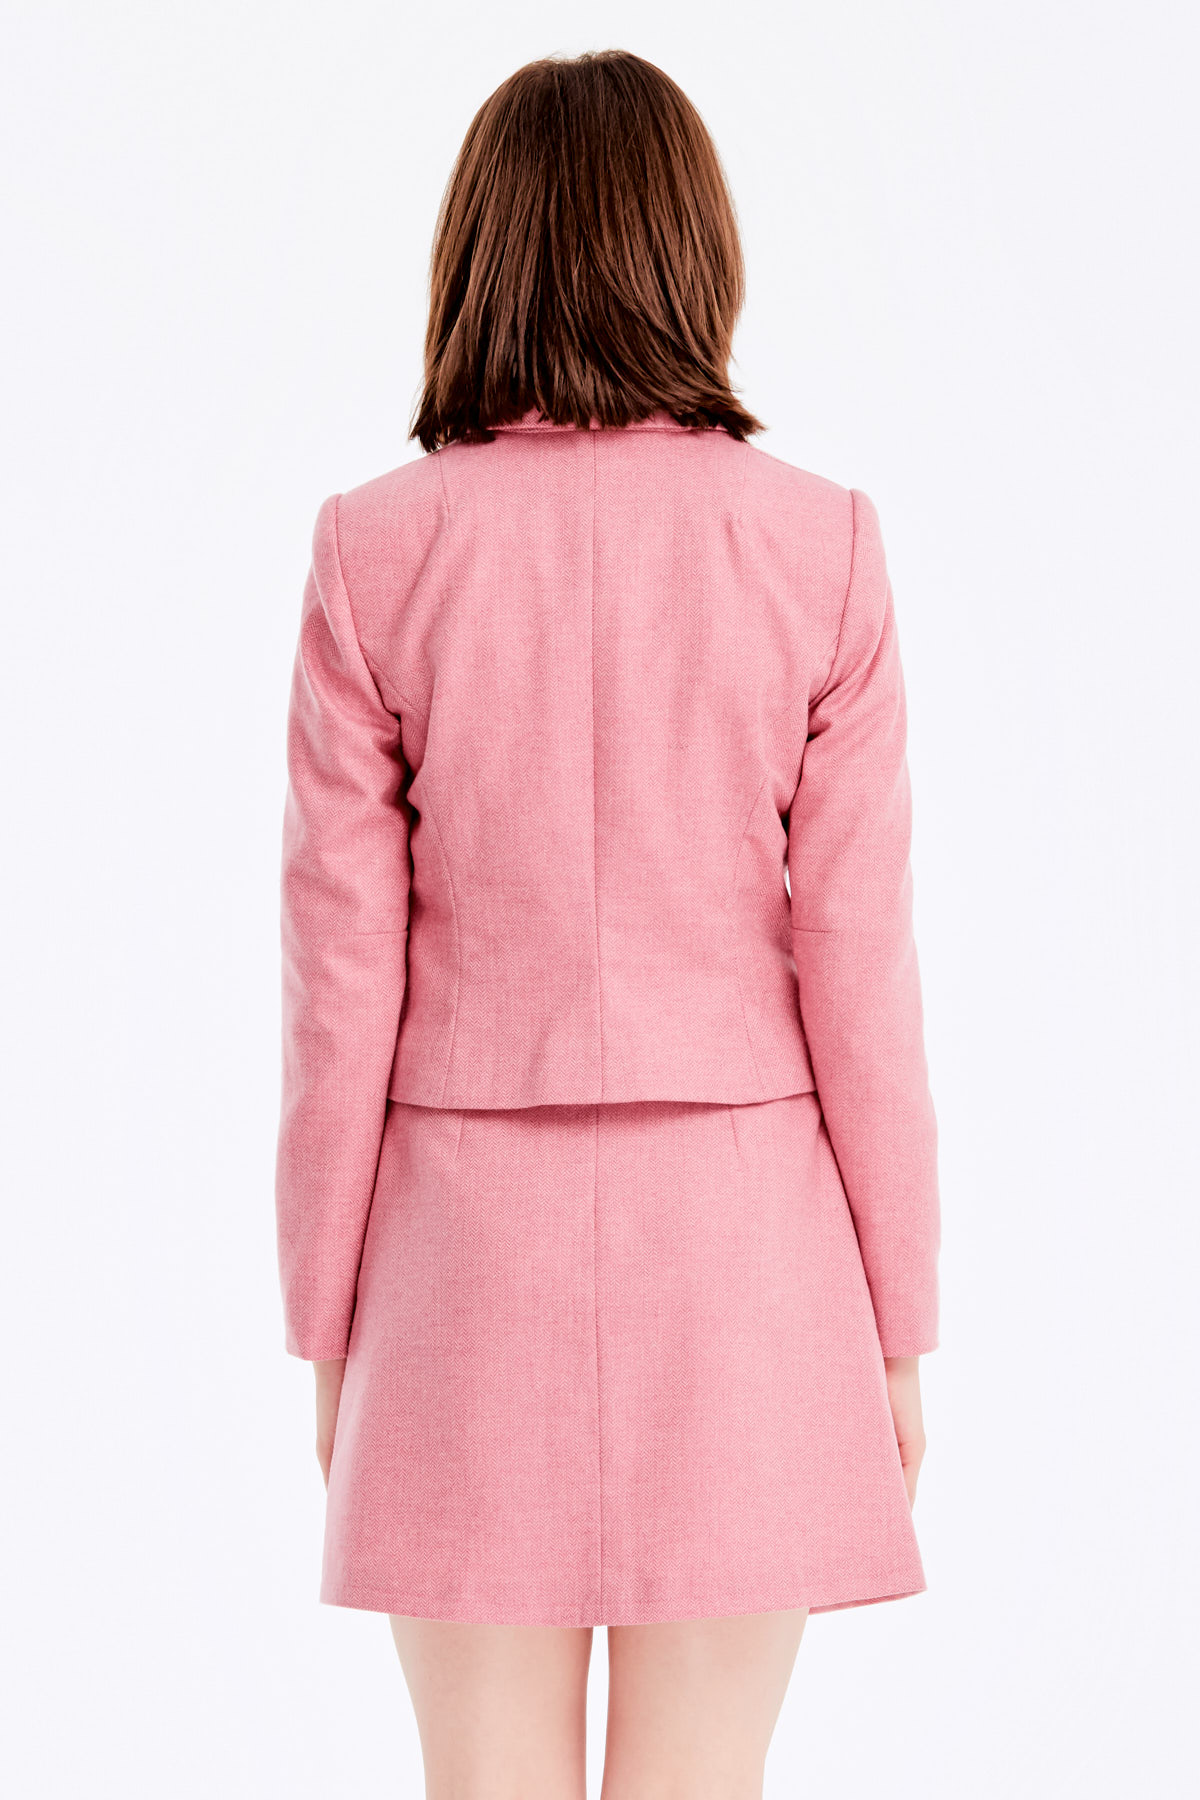 Short jacket with pink herringbone print, photo 6